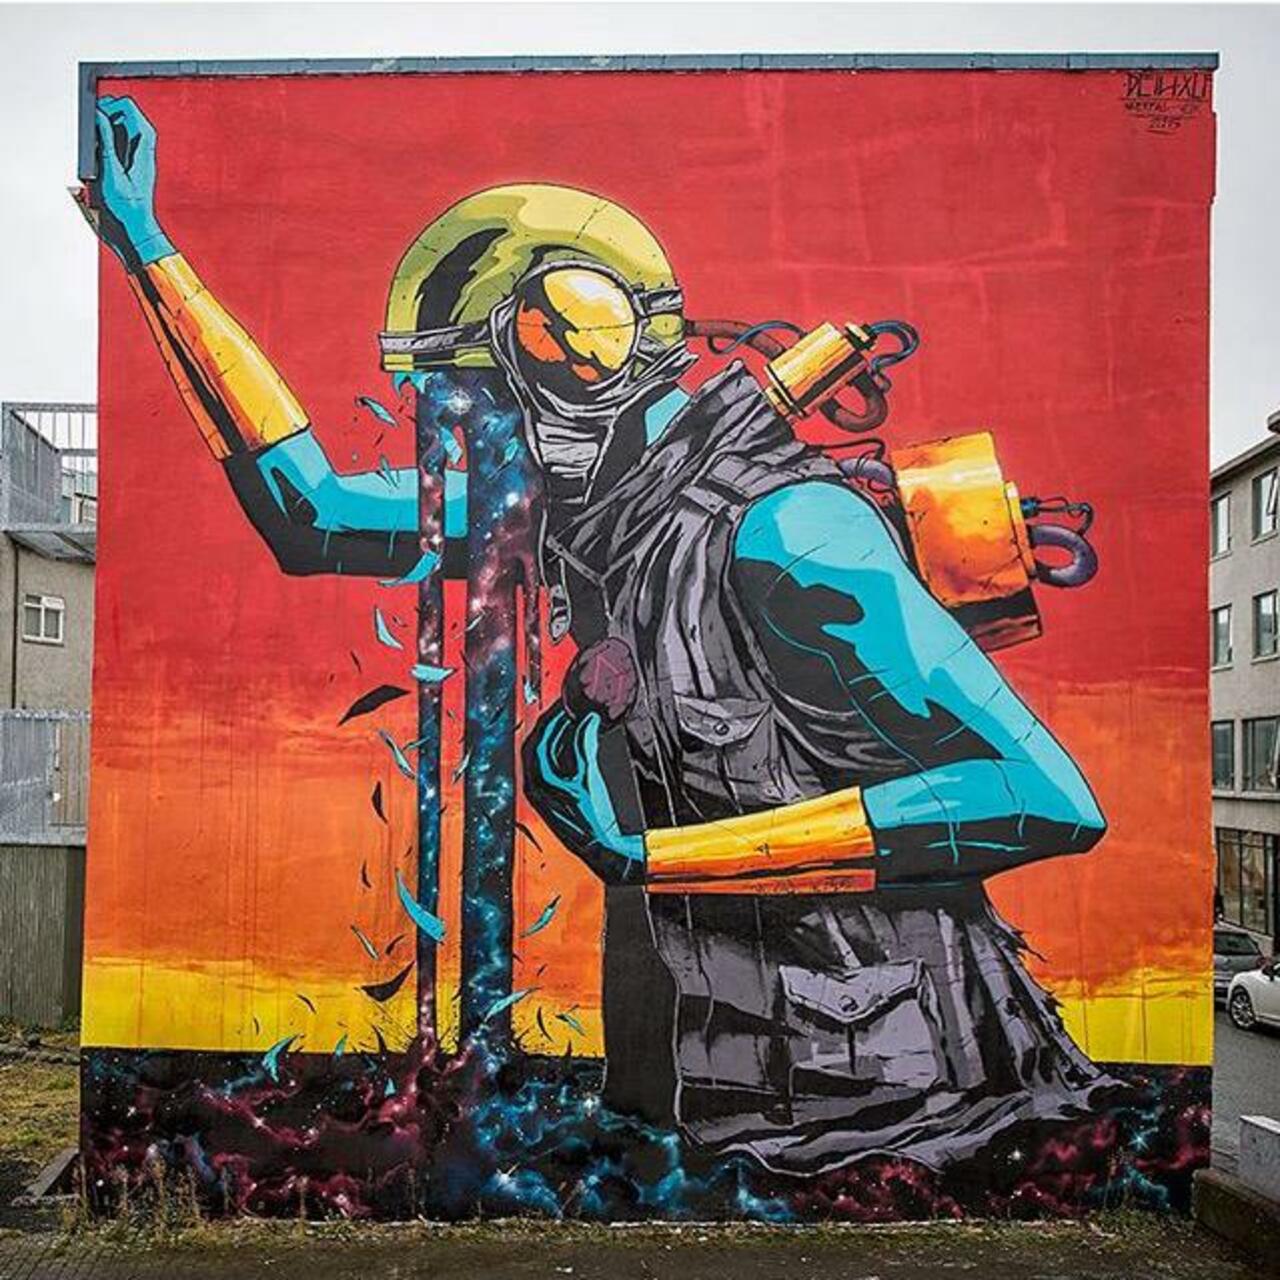 RT ArchaicManor "Street Art by Deih in Reykjavik 

#art #graffiti #mural #streetart https://t.co/9gHCzvrpfz yo"